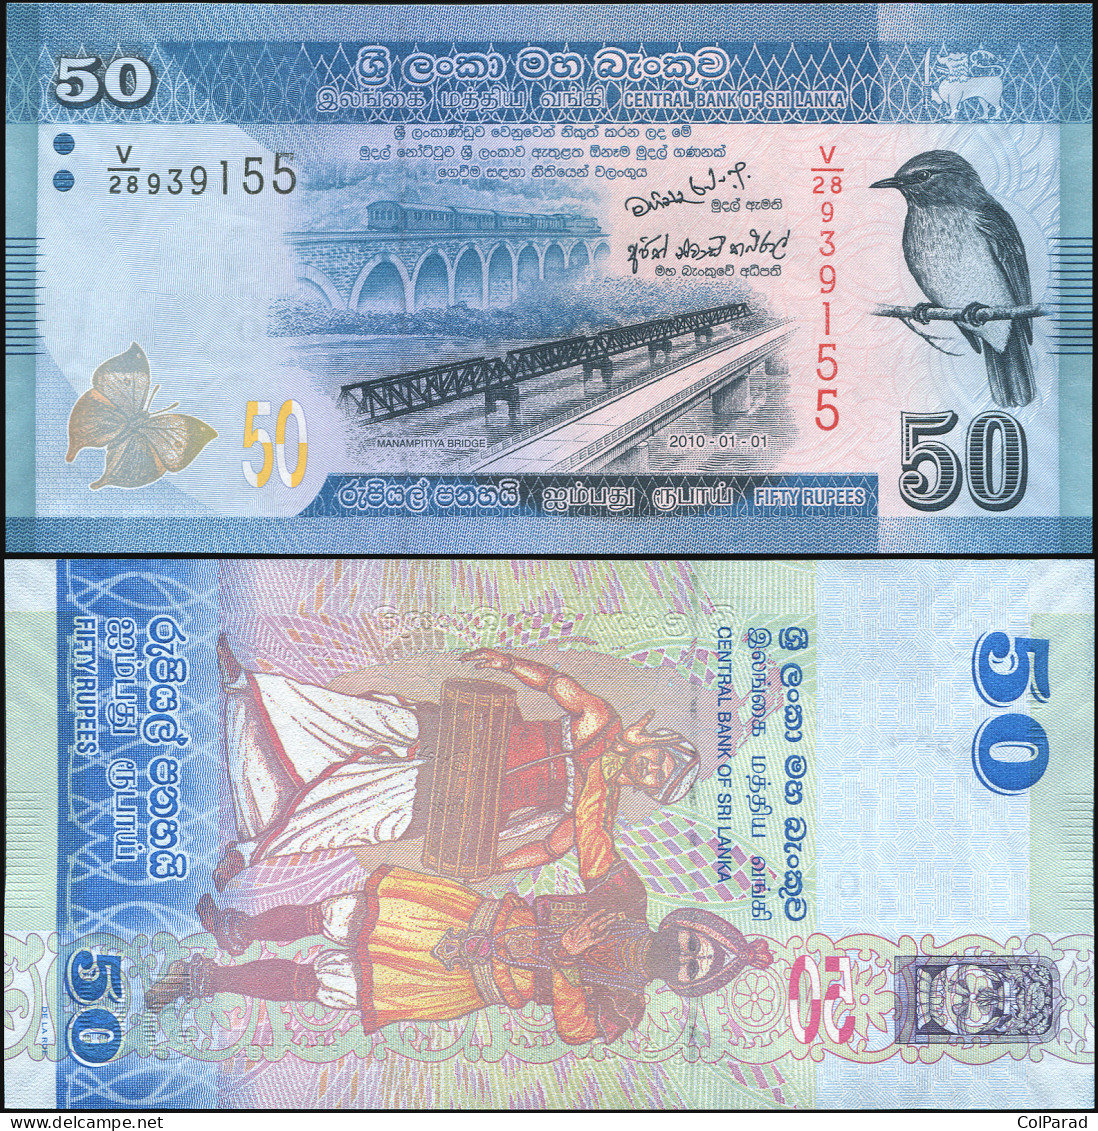 SRI LANKA 50 RUPEES - 01.01.2010 (2011) - Paper Unc - P.124a1 Banknote - Sri Lanka